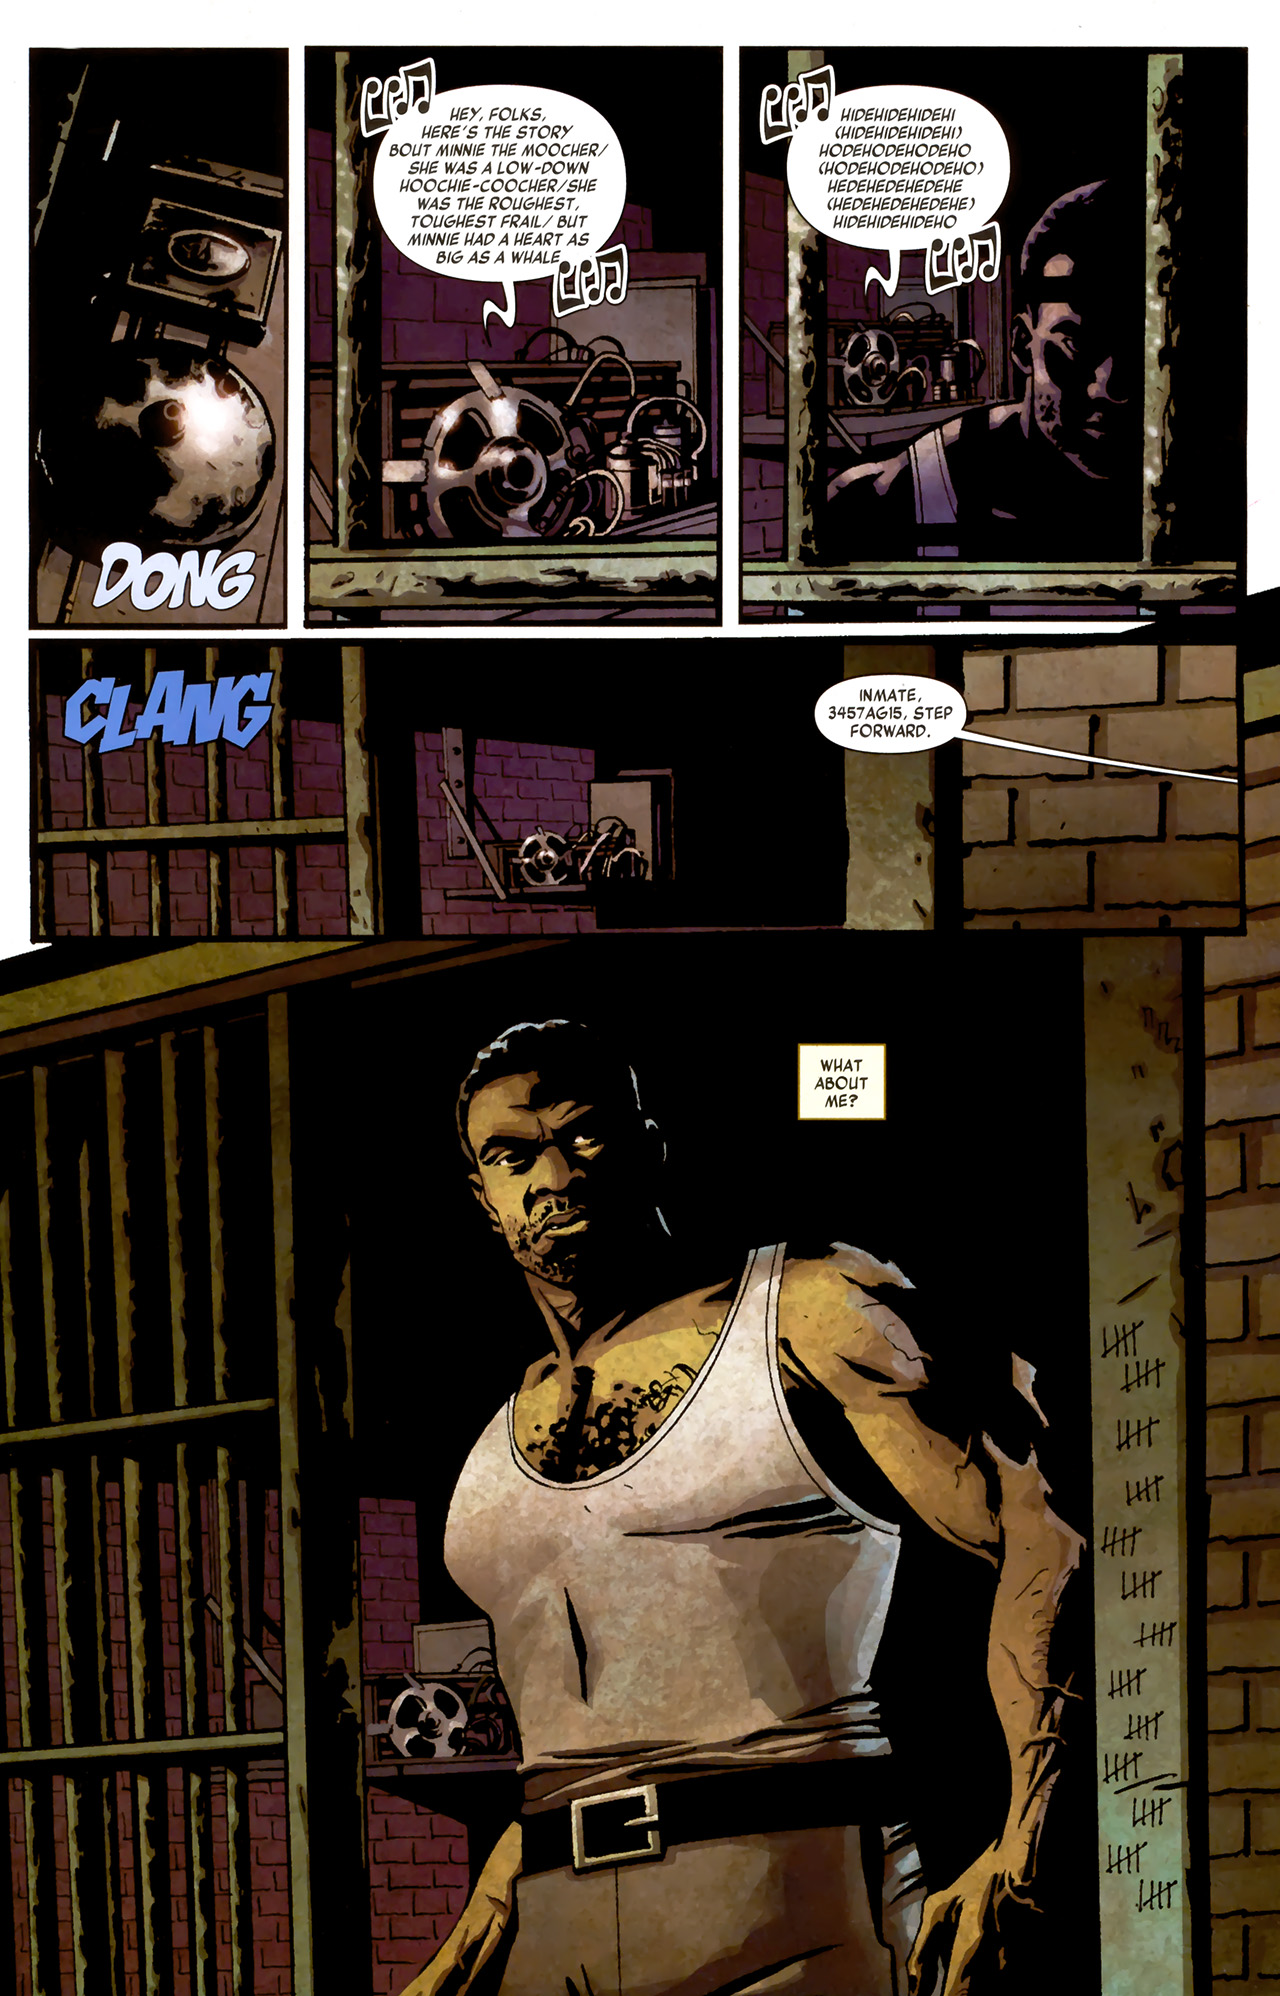 Luke Cage Noir #1 (of 4) - Moon Over Harlem, Part 1